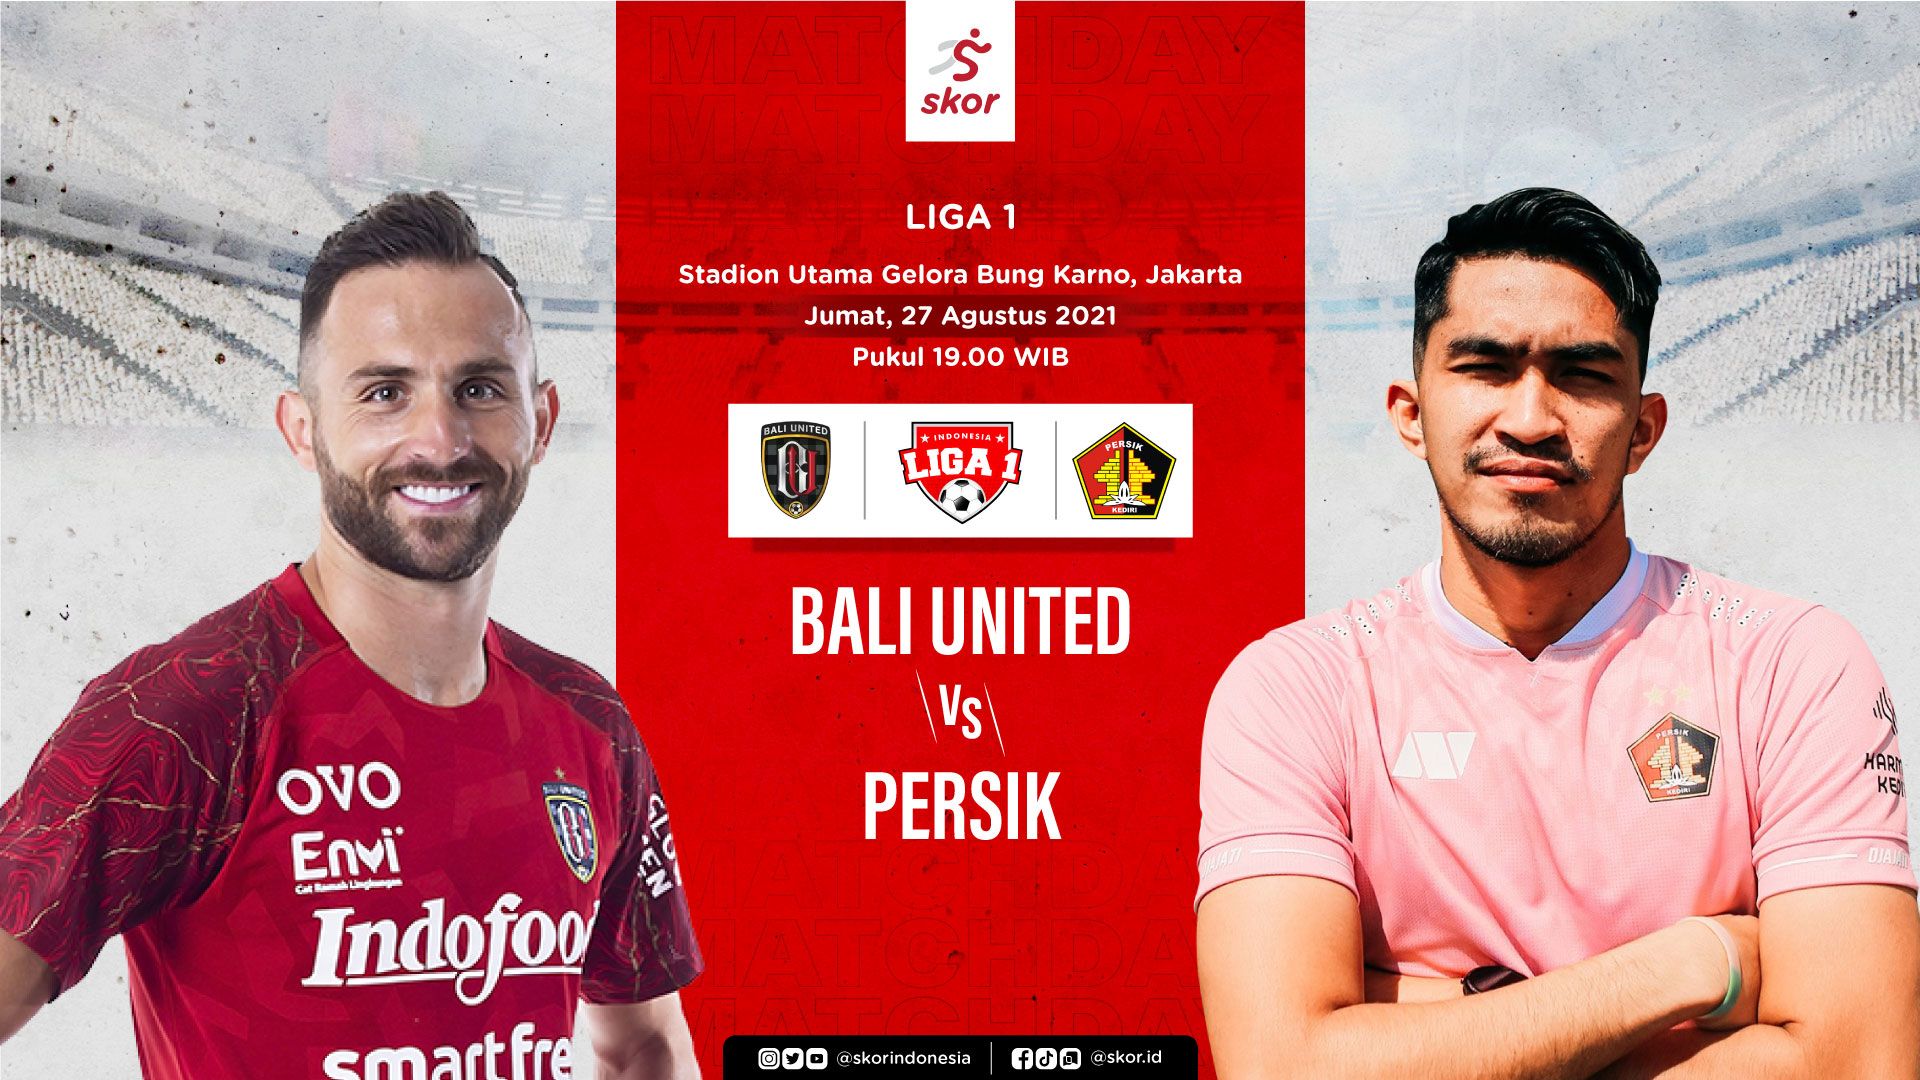 Bali united vs persik kediri